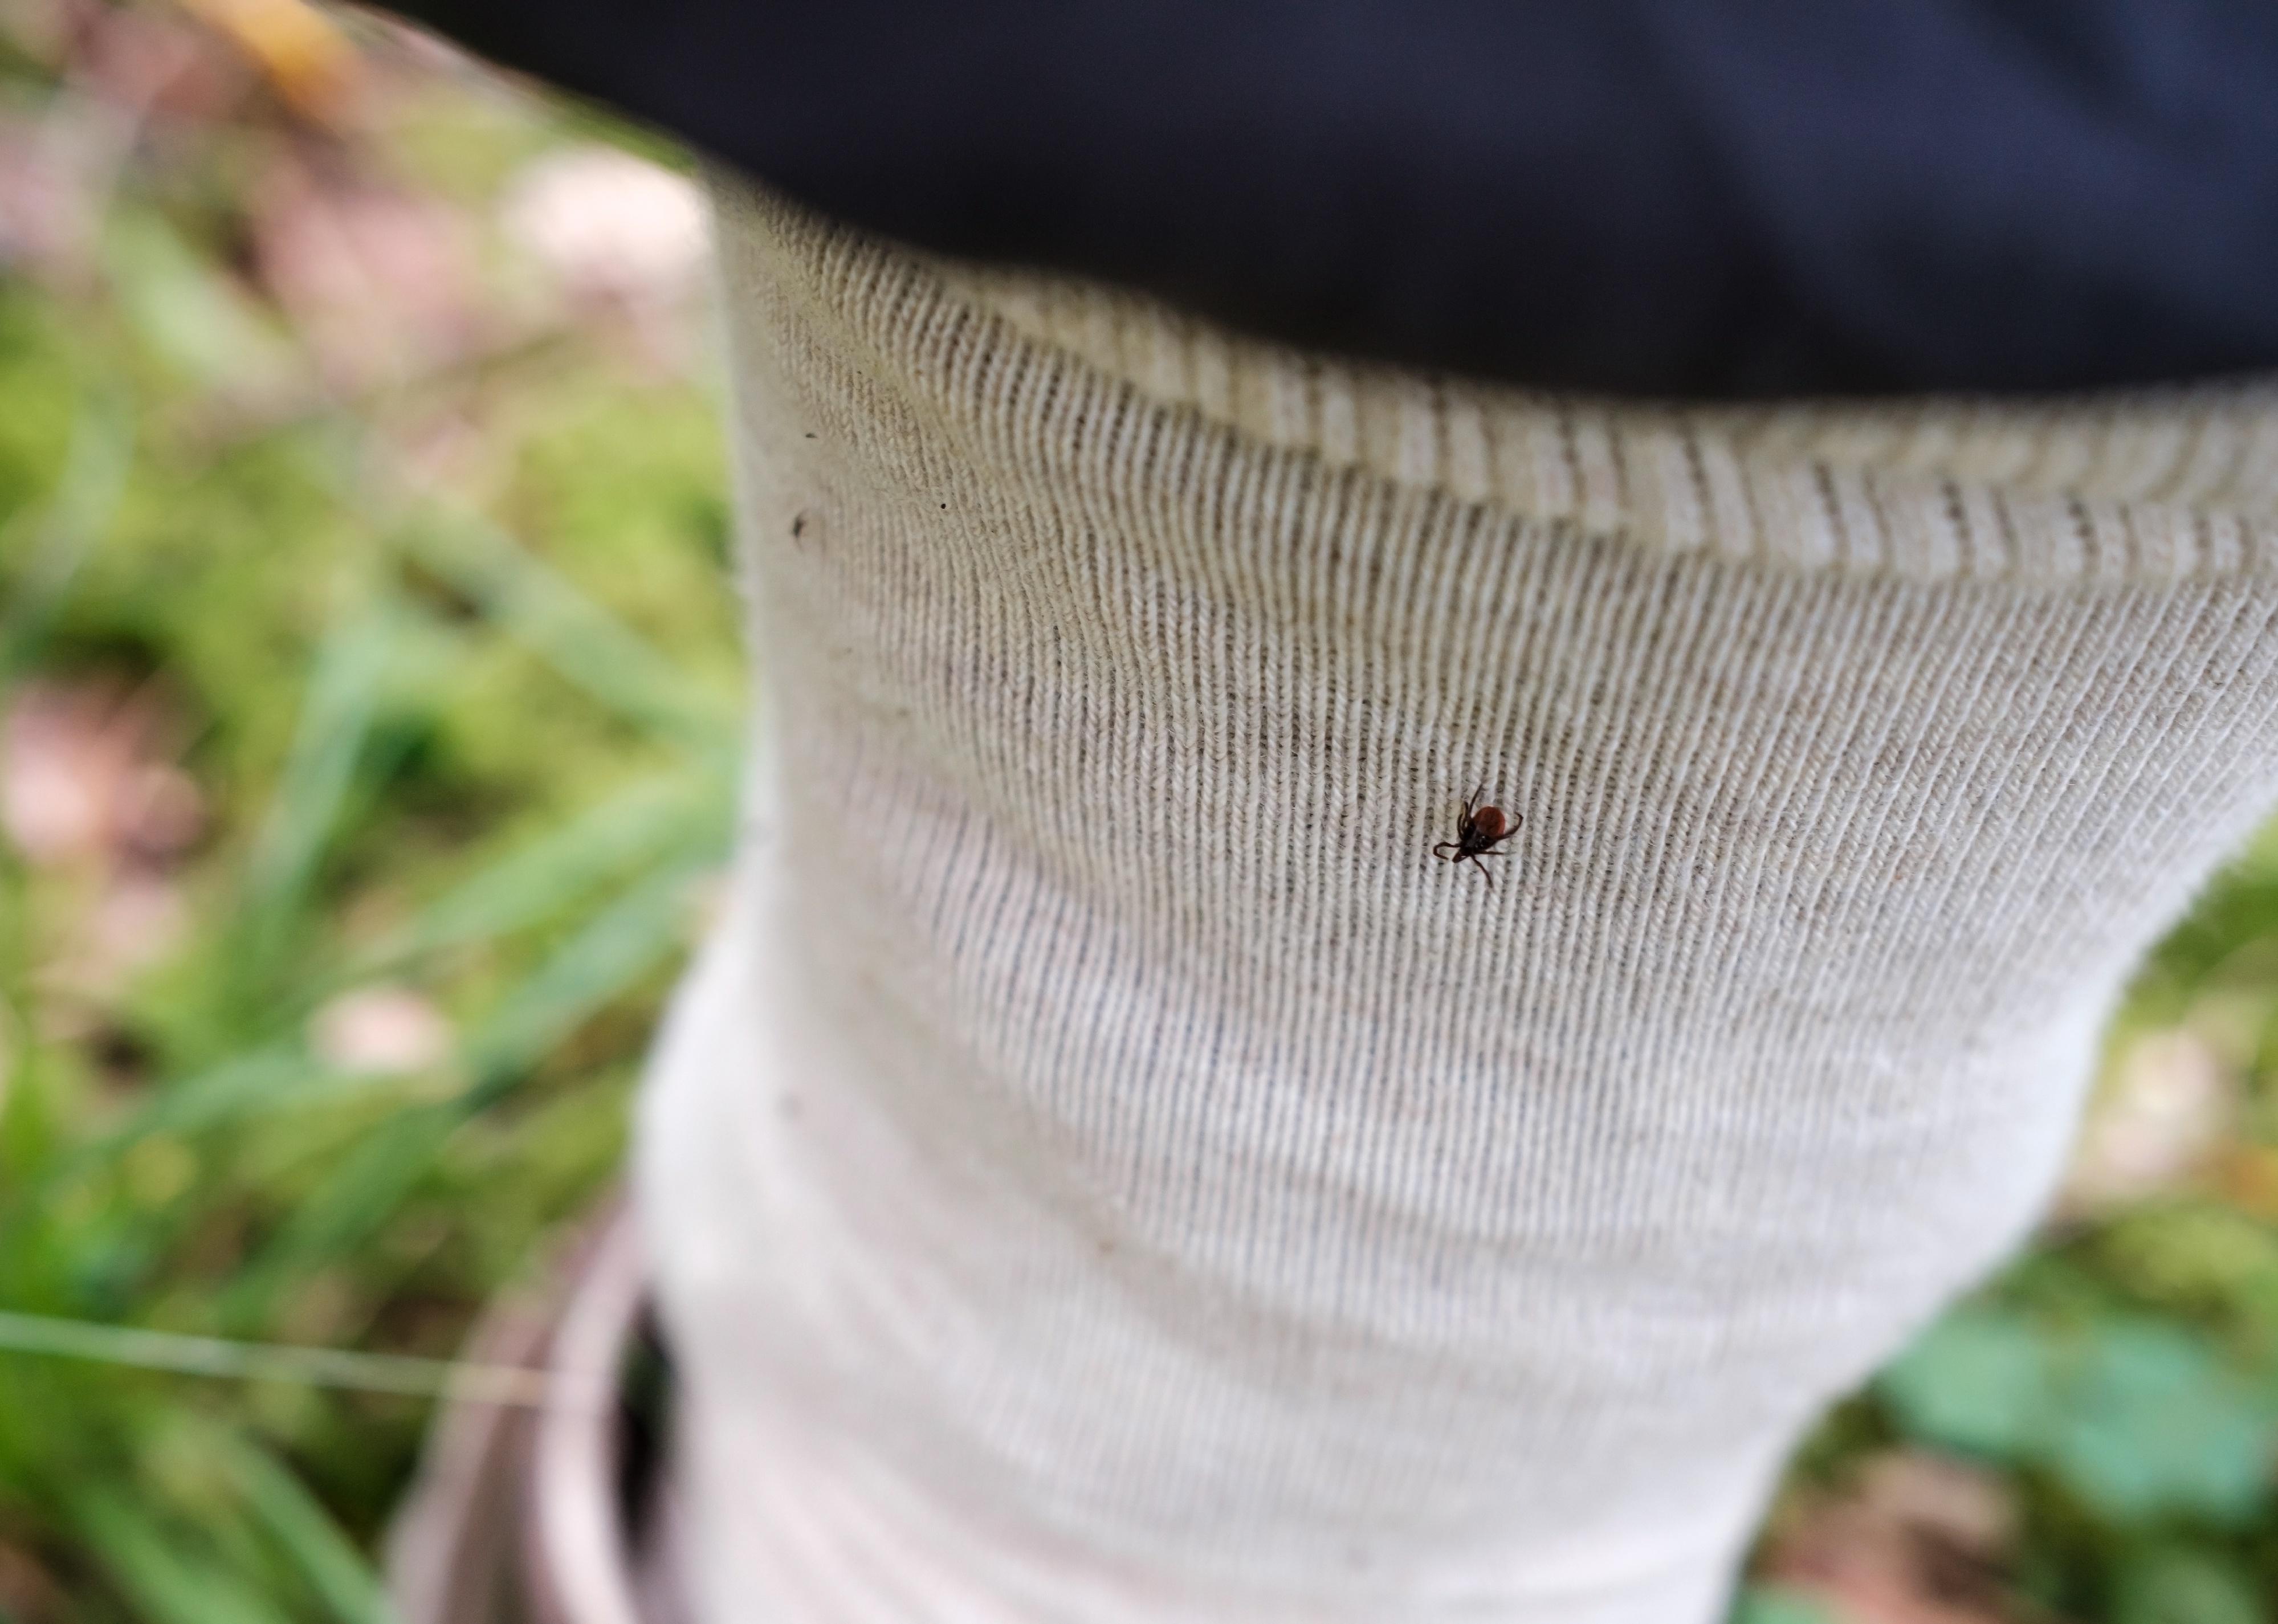 A tick sits on light-colored socks.